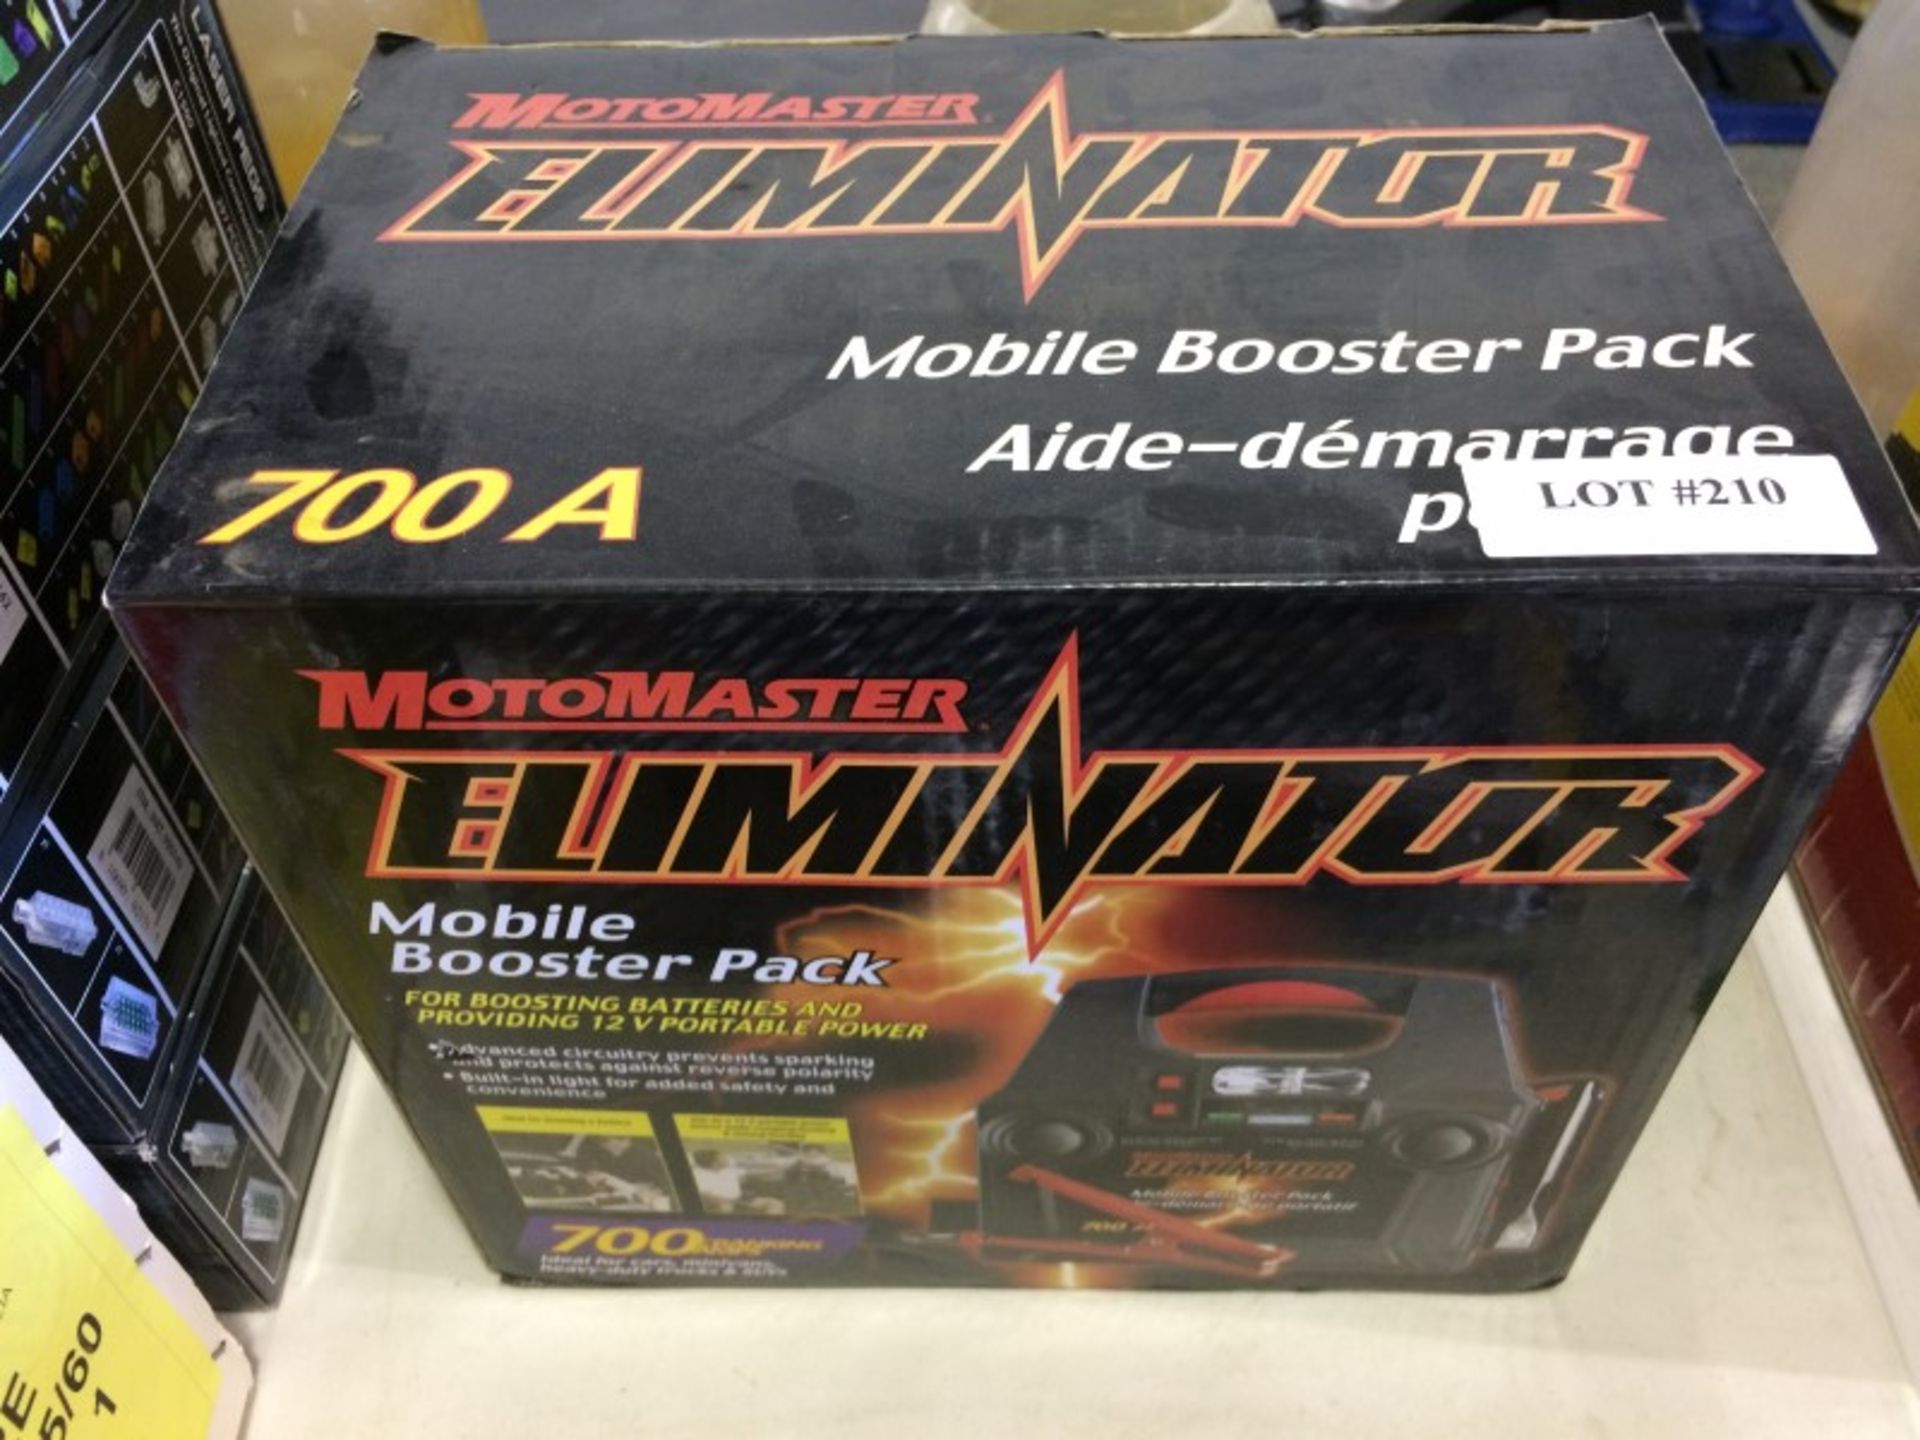 Motomaster Mobile Booster Pack